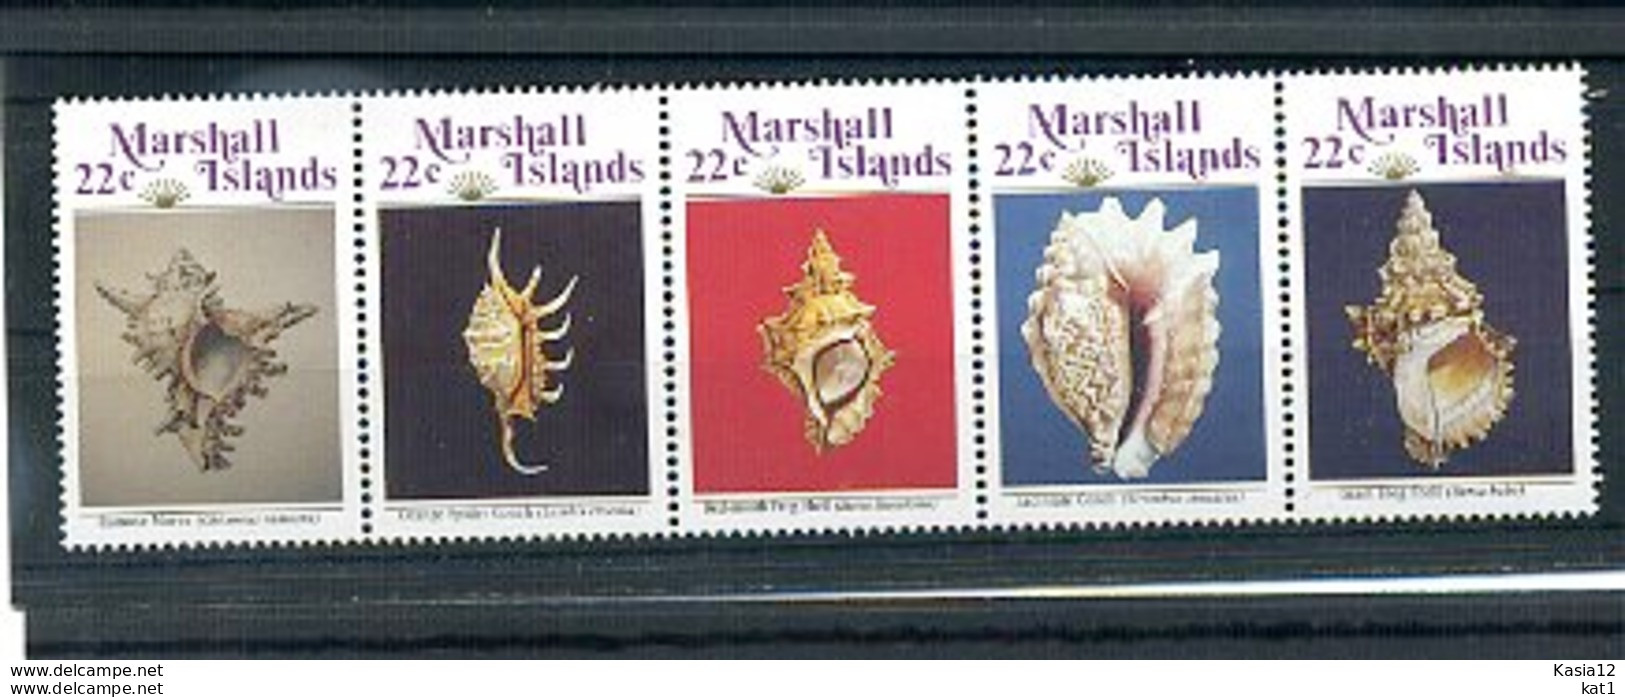 A32233)Marshallinseln 87 - 91 ZDR**, Muscheln - Marshallinseln